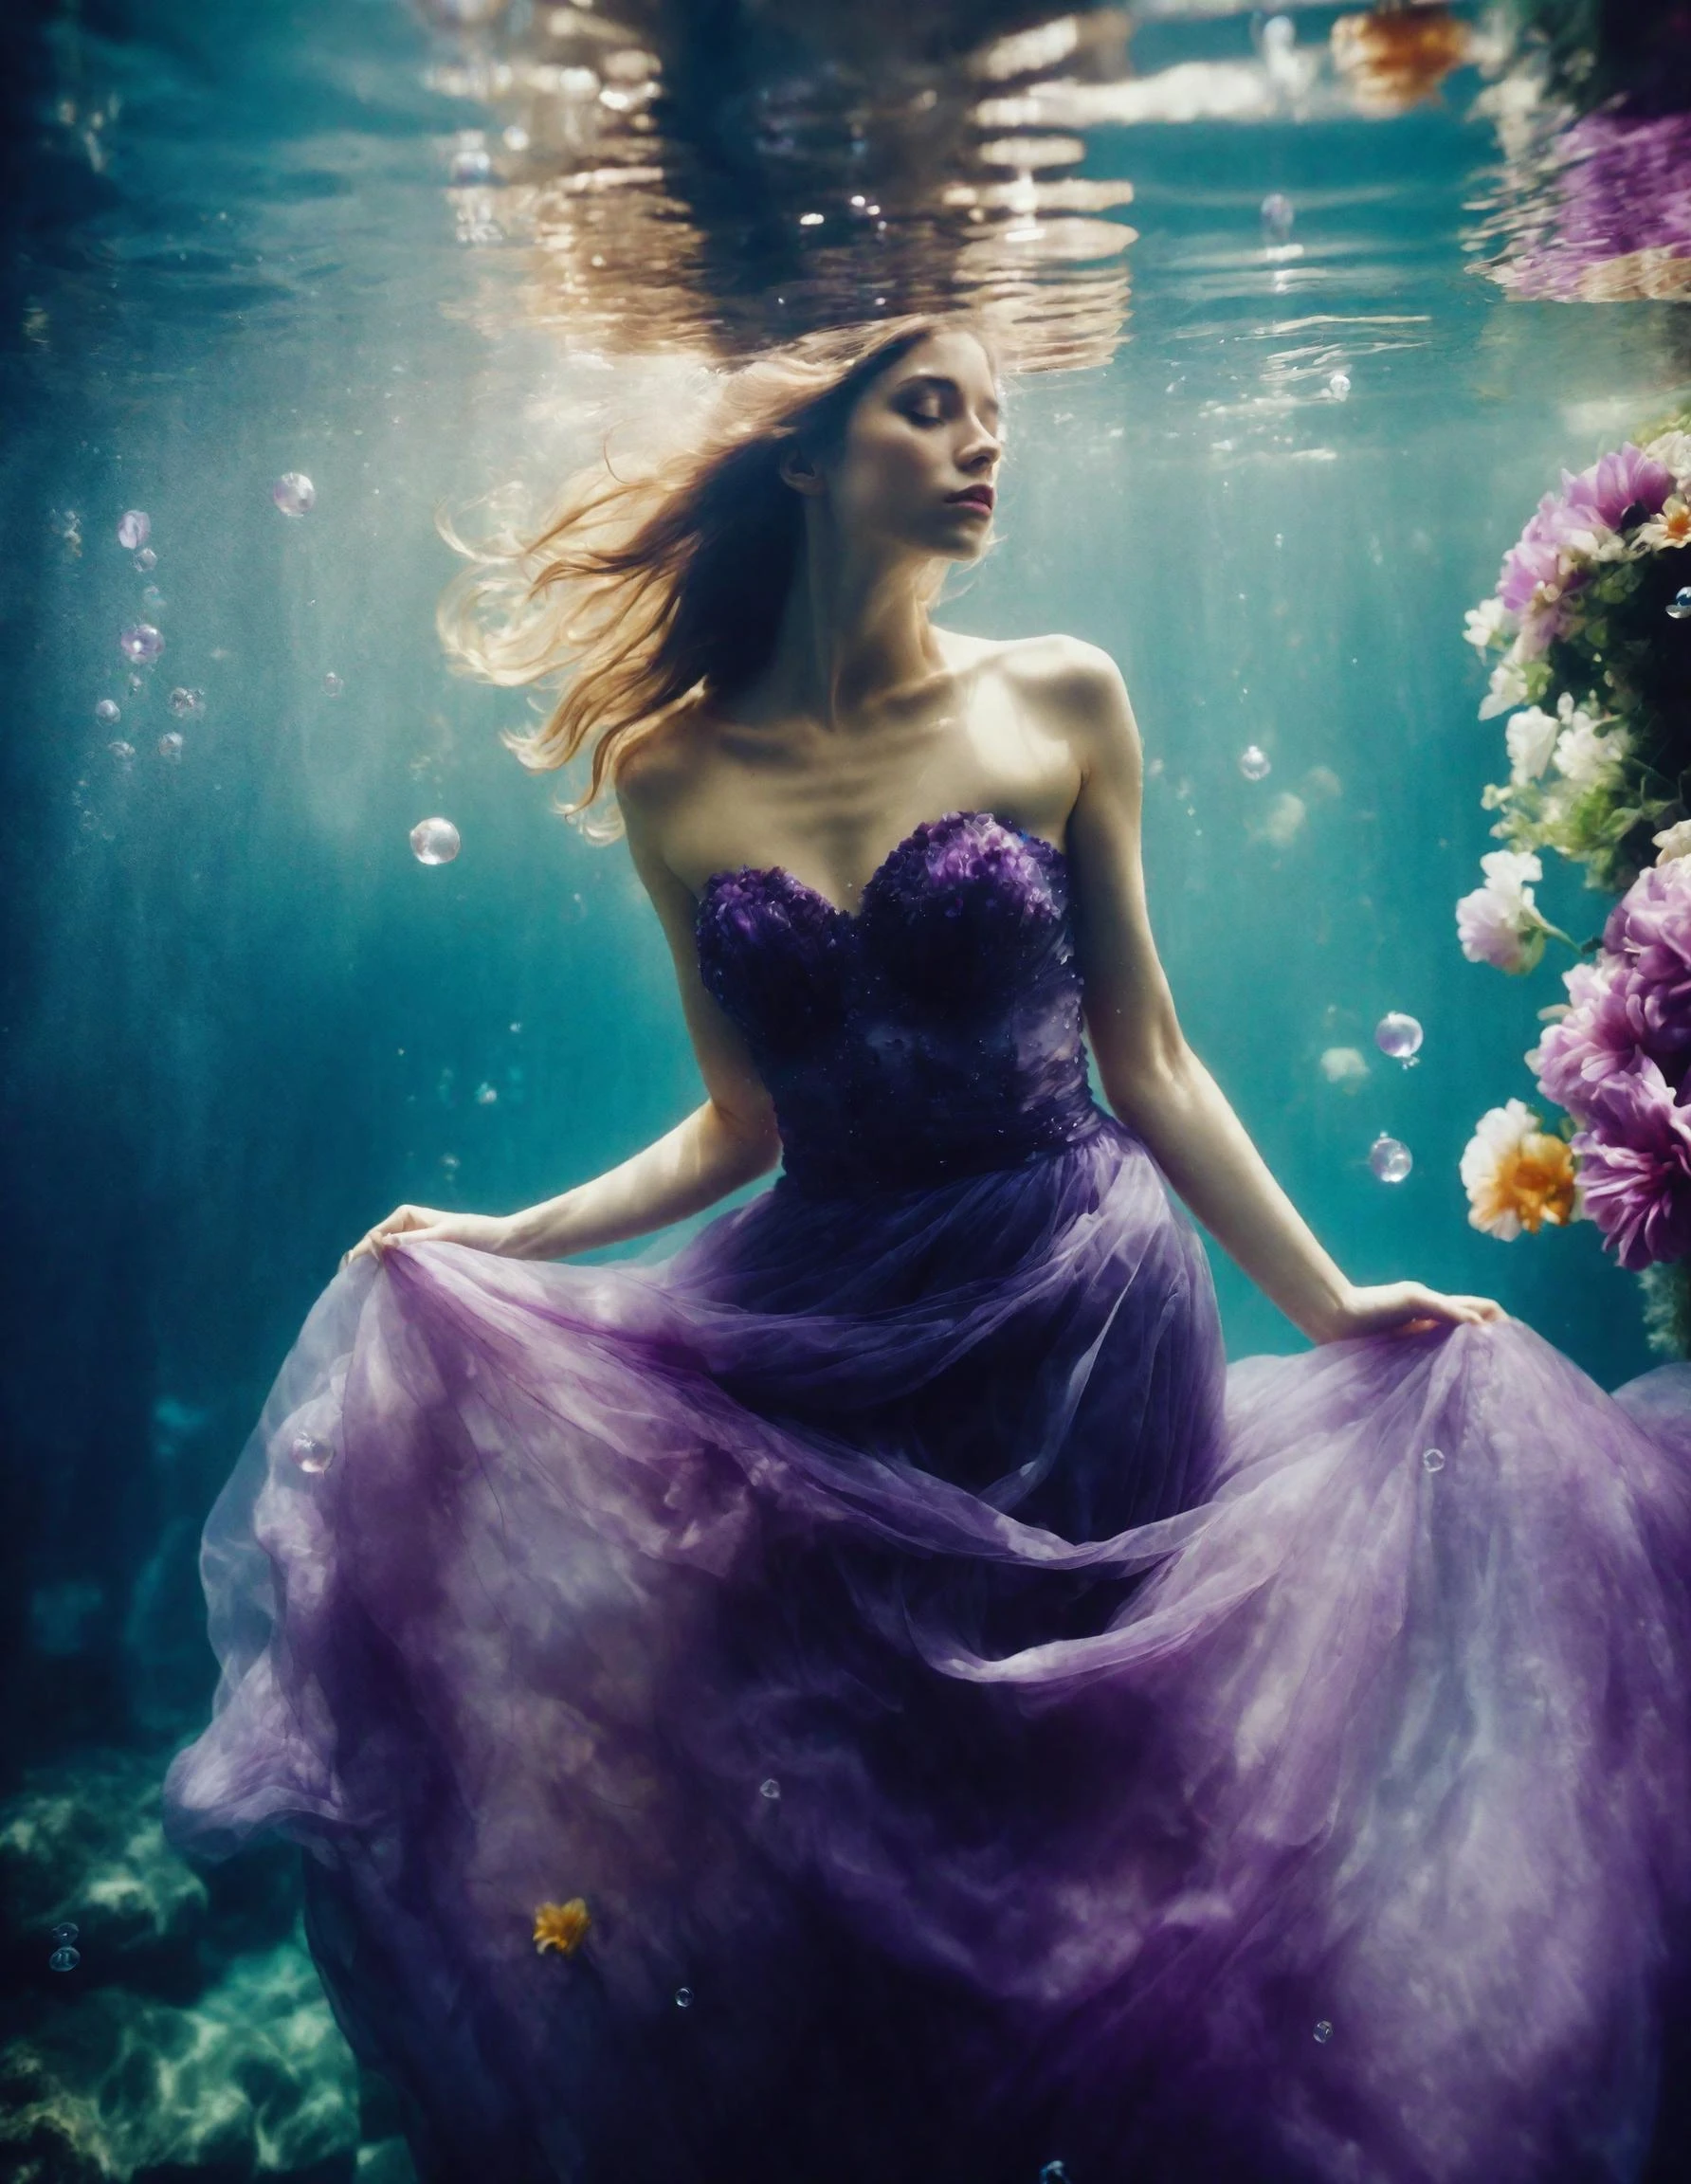 RAW 照片, (实际的:1.5), 水下, closeup of a woman floating 水下, 看看相机, 华丽的紫色长款薄纱连衣裙, (背景中的水下岩石:0.25), 水中的气泡, 花朵悬浮在水中, 详细的, 错综复杂, 做梦, 经过水过滤的光线, 罗摩摄影